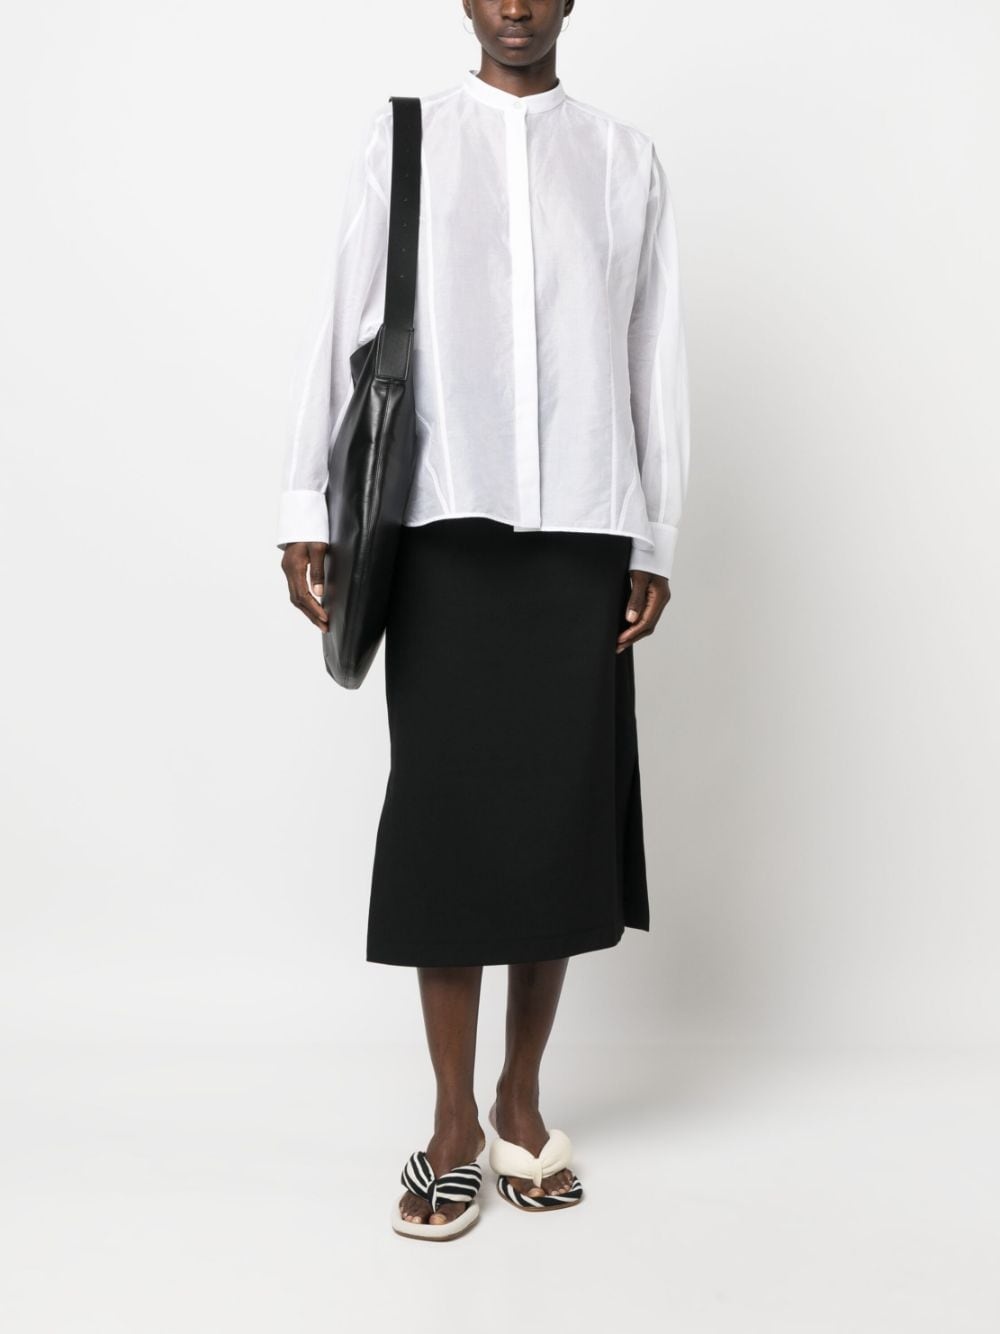 Jil Sander raised-placket organic cotton shirt - White